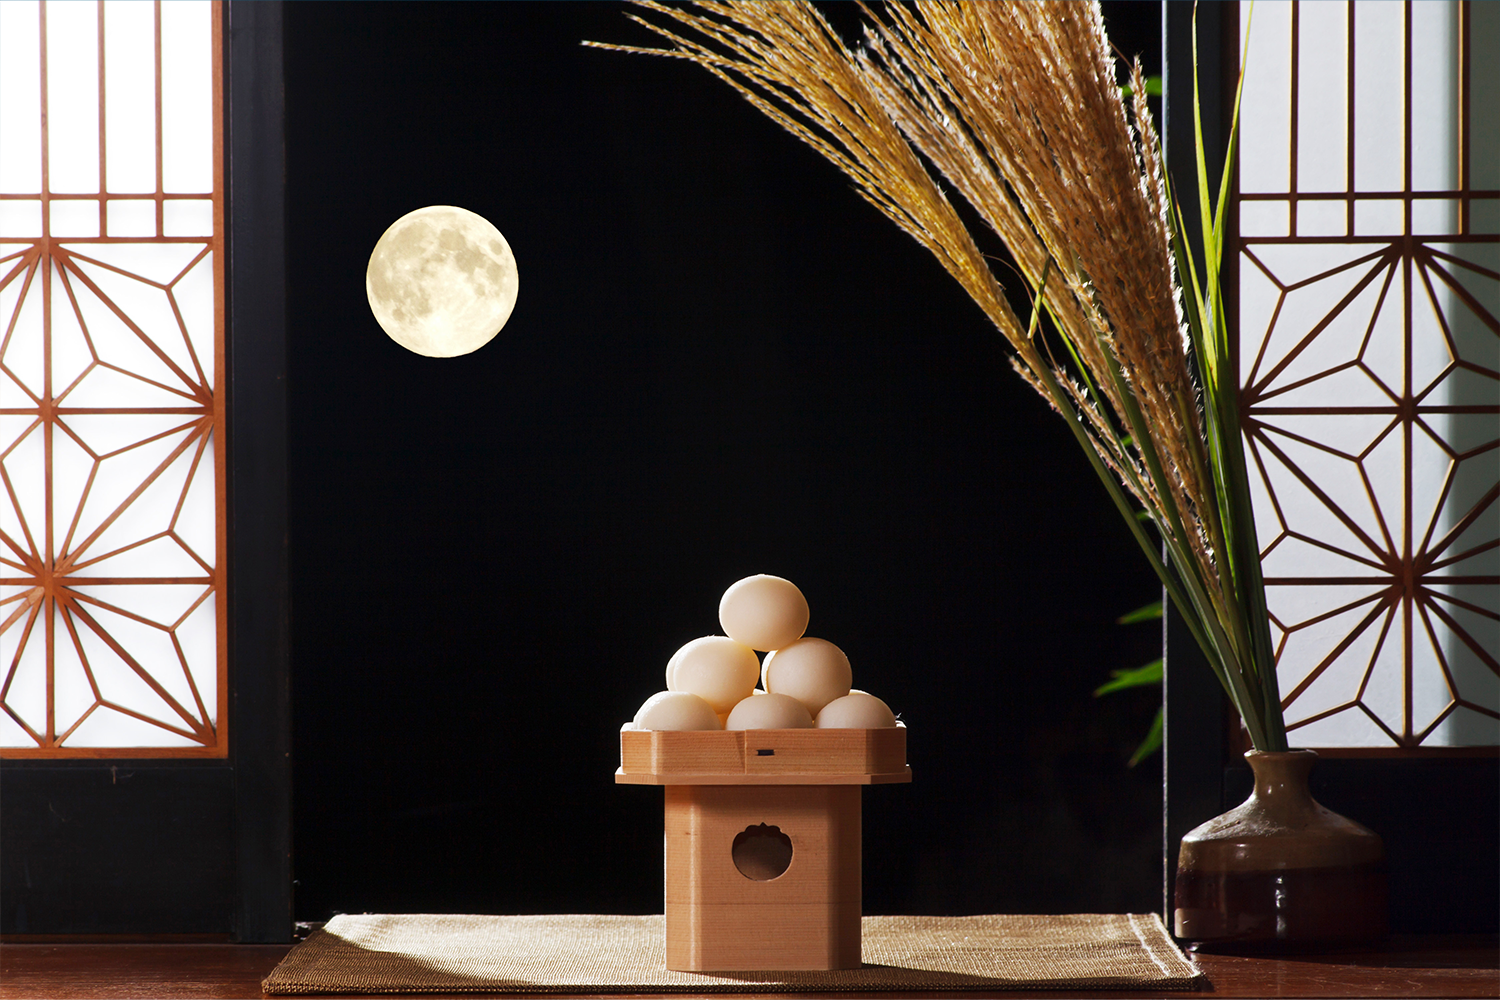 A Tsukimi scene with the moon, Tsukimi dango, and pampas grass.